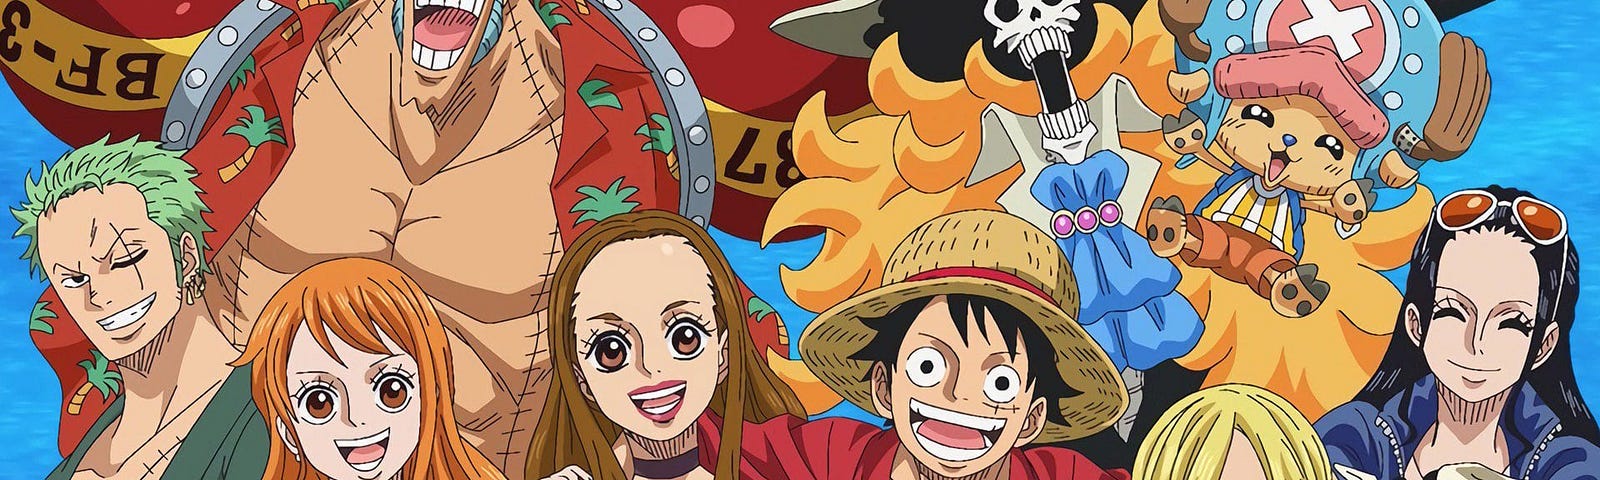 One Piece Anime Episode 924 Eng Sub On Fuji Tv Full Hd Medium